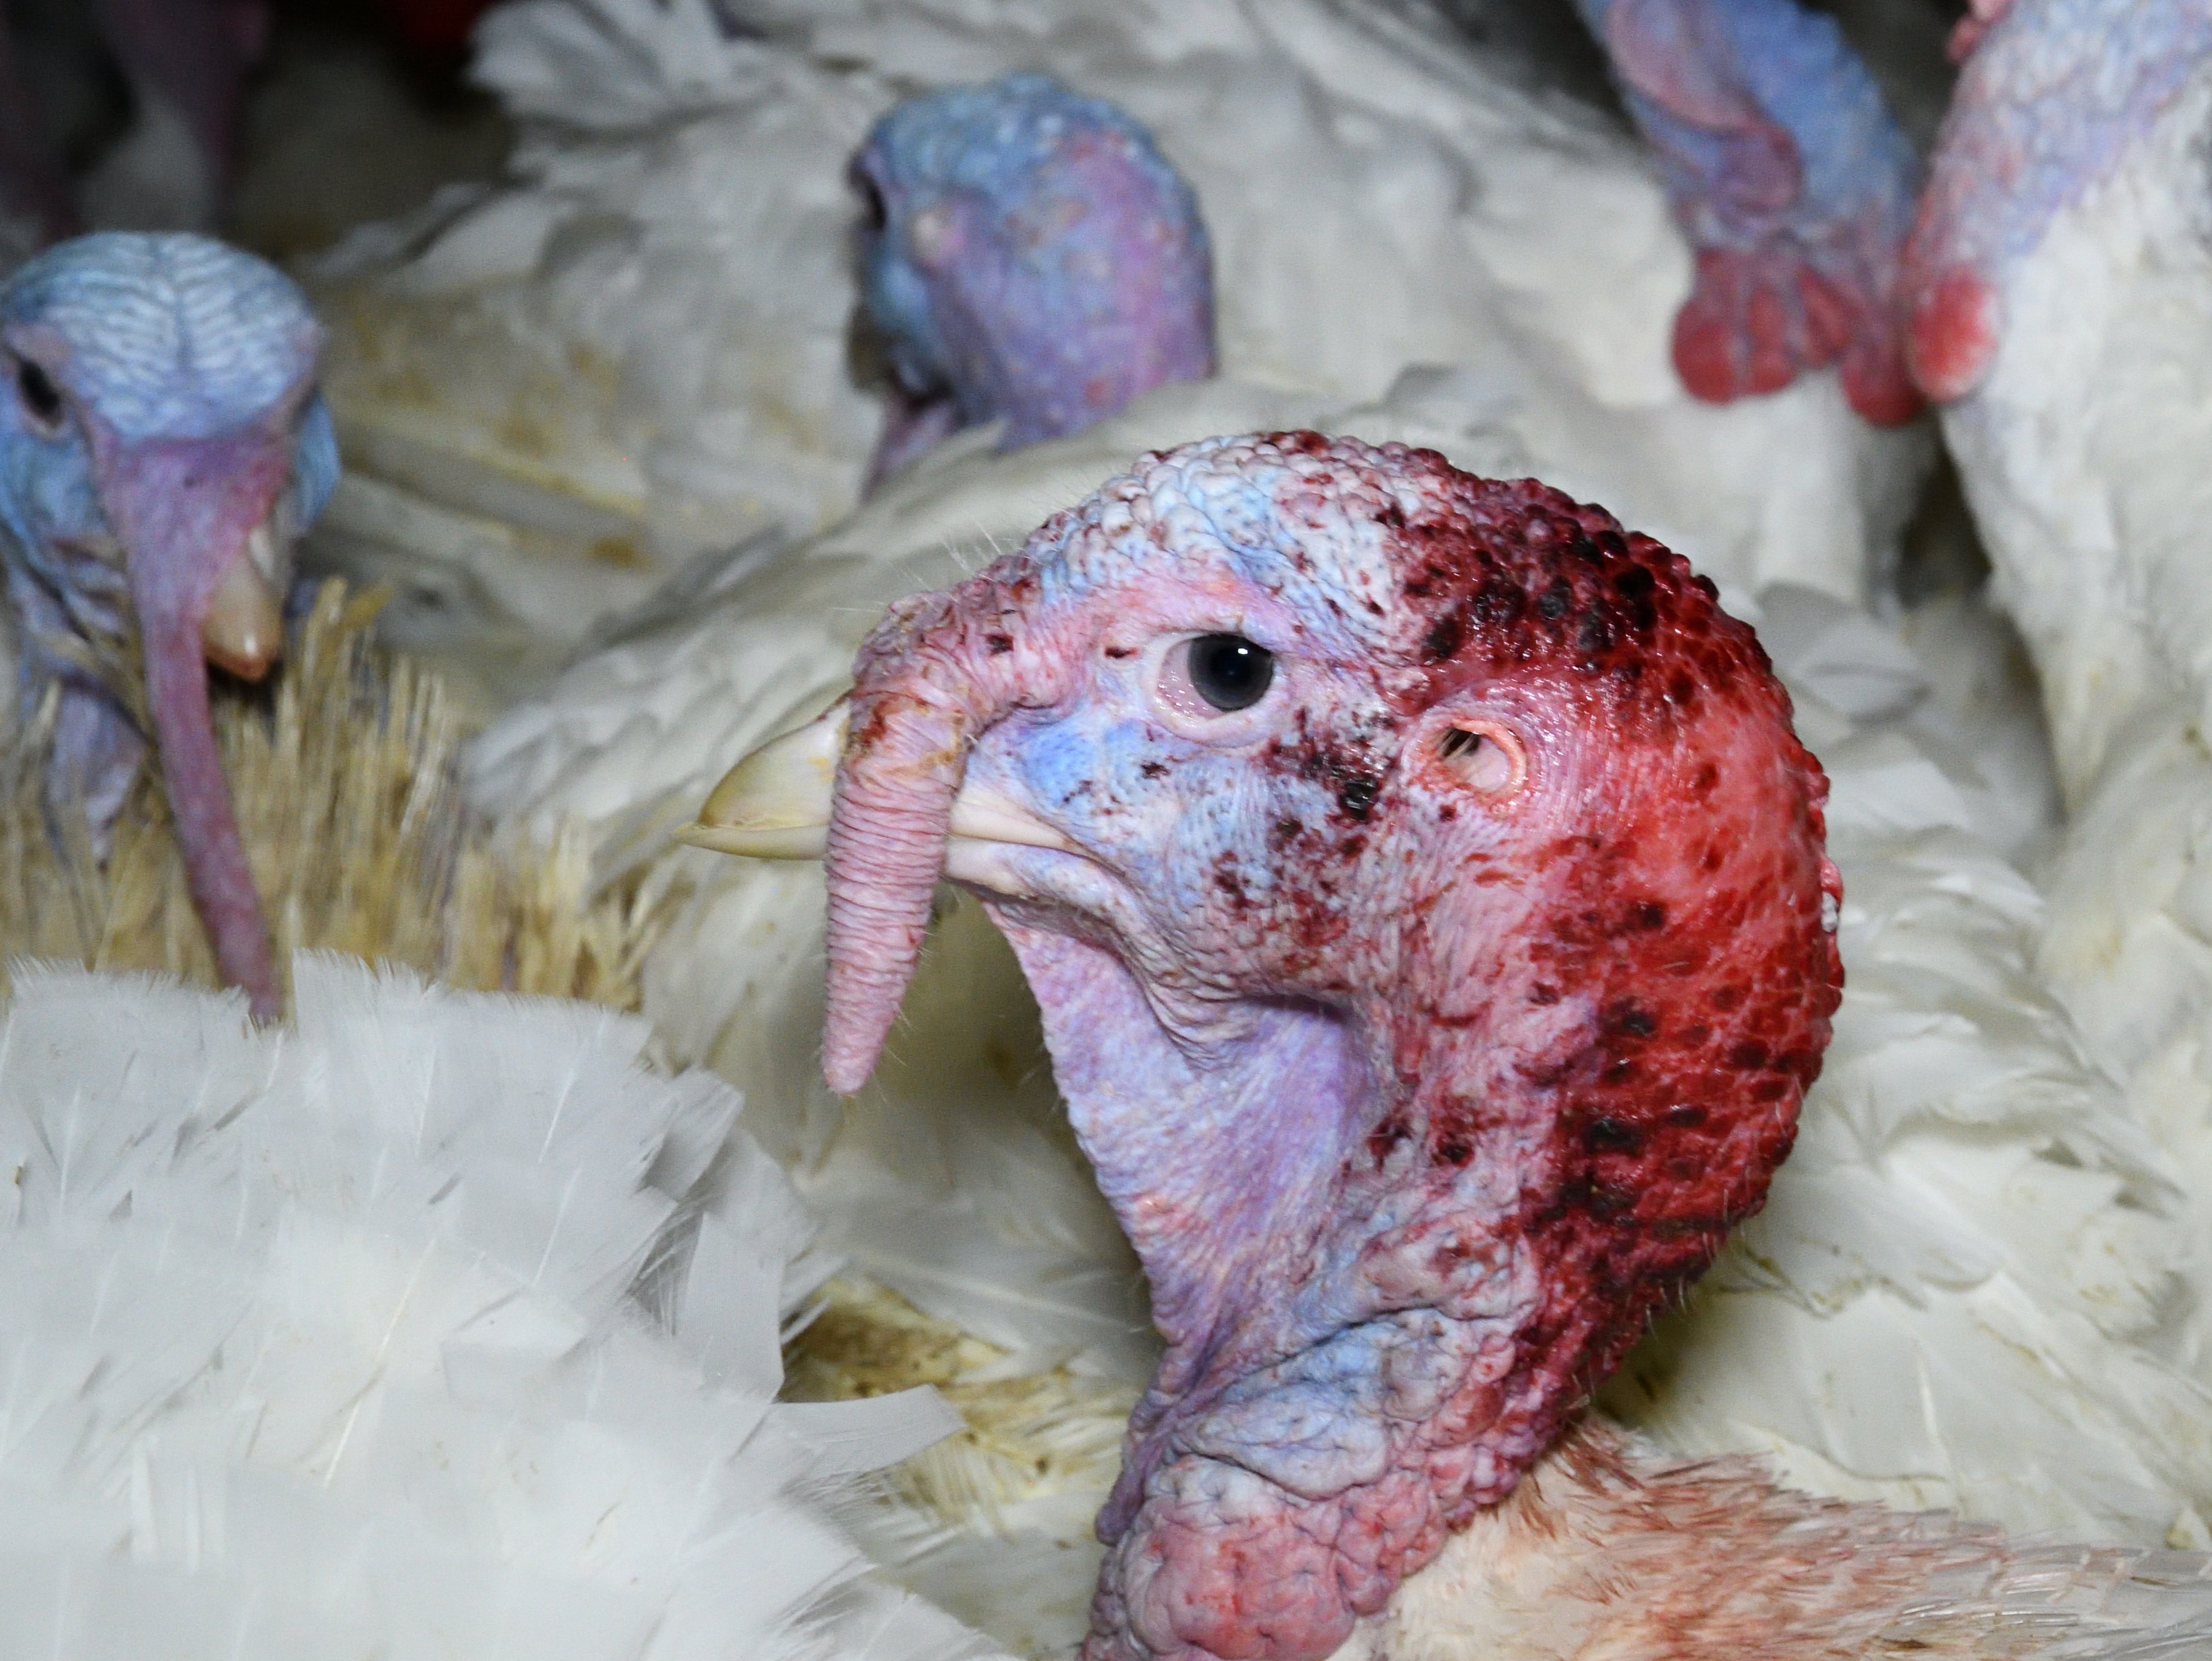 Intensively farmed turkeys often suffer health problems